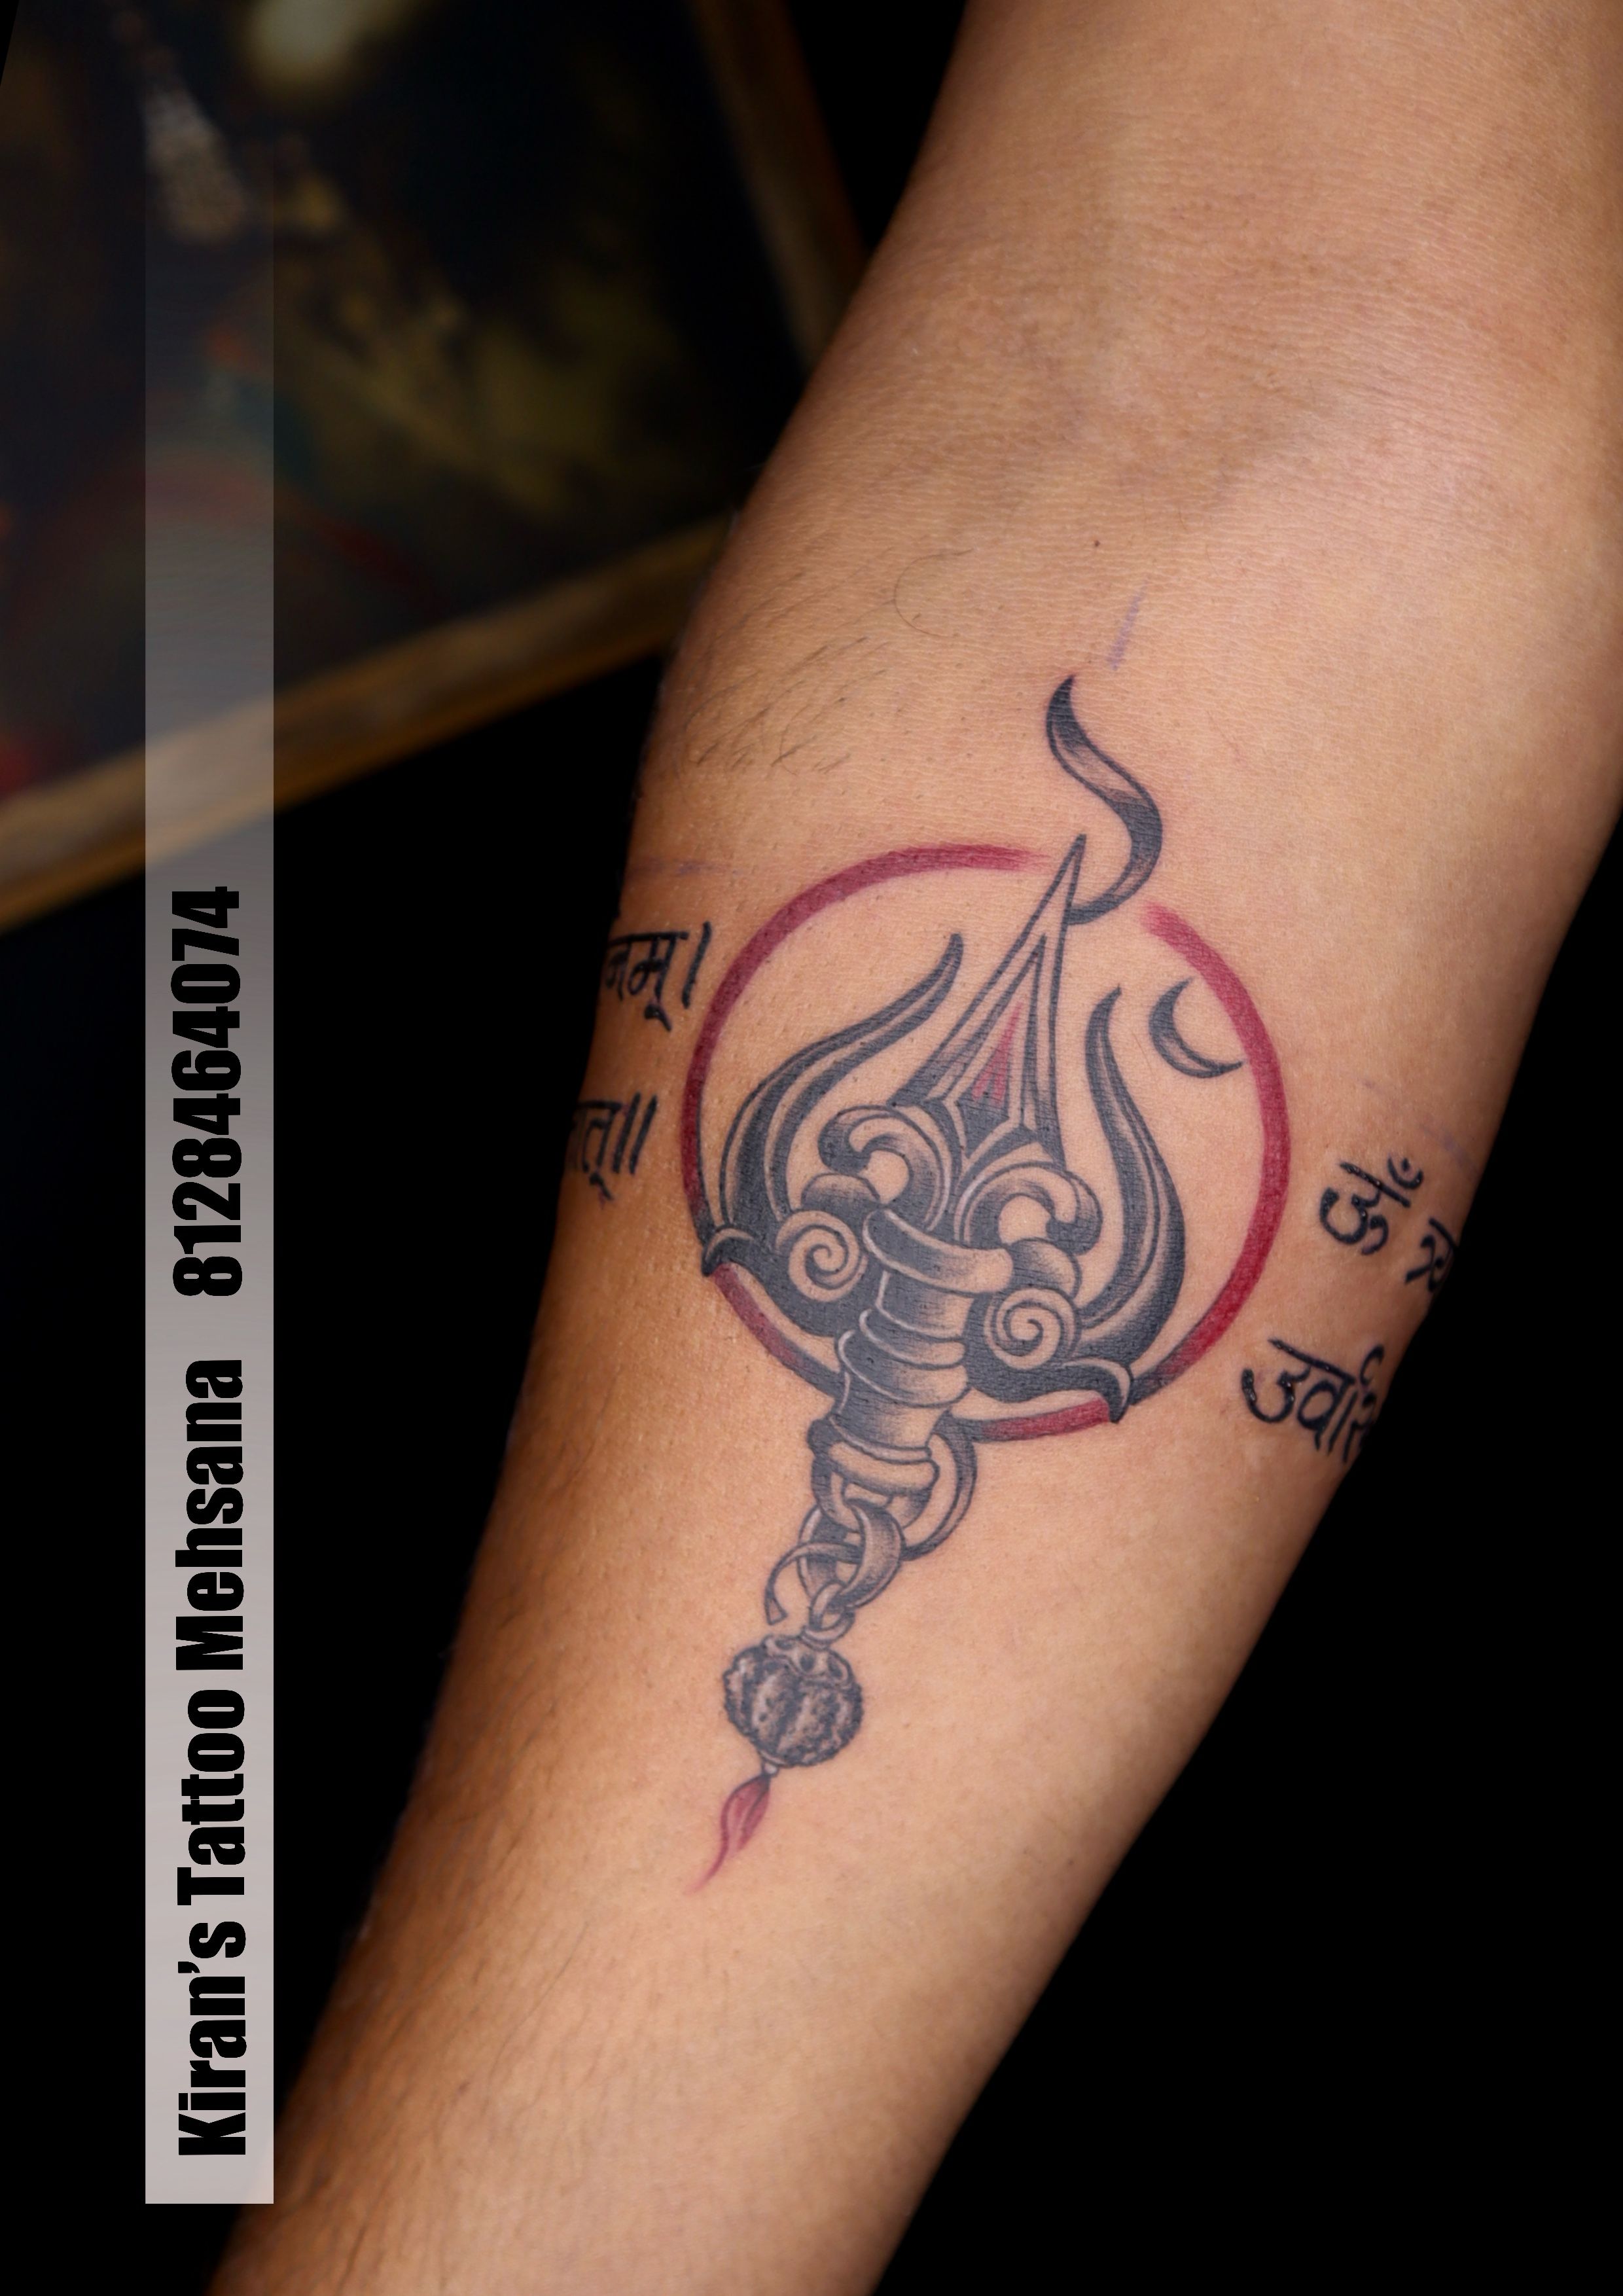 Shiva armband Tattoo design | Forearm band tattoos, Armband tattoo design,  Hand tattoos for guys